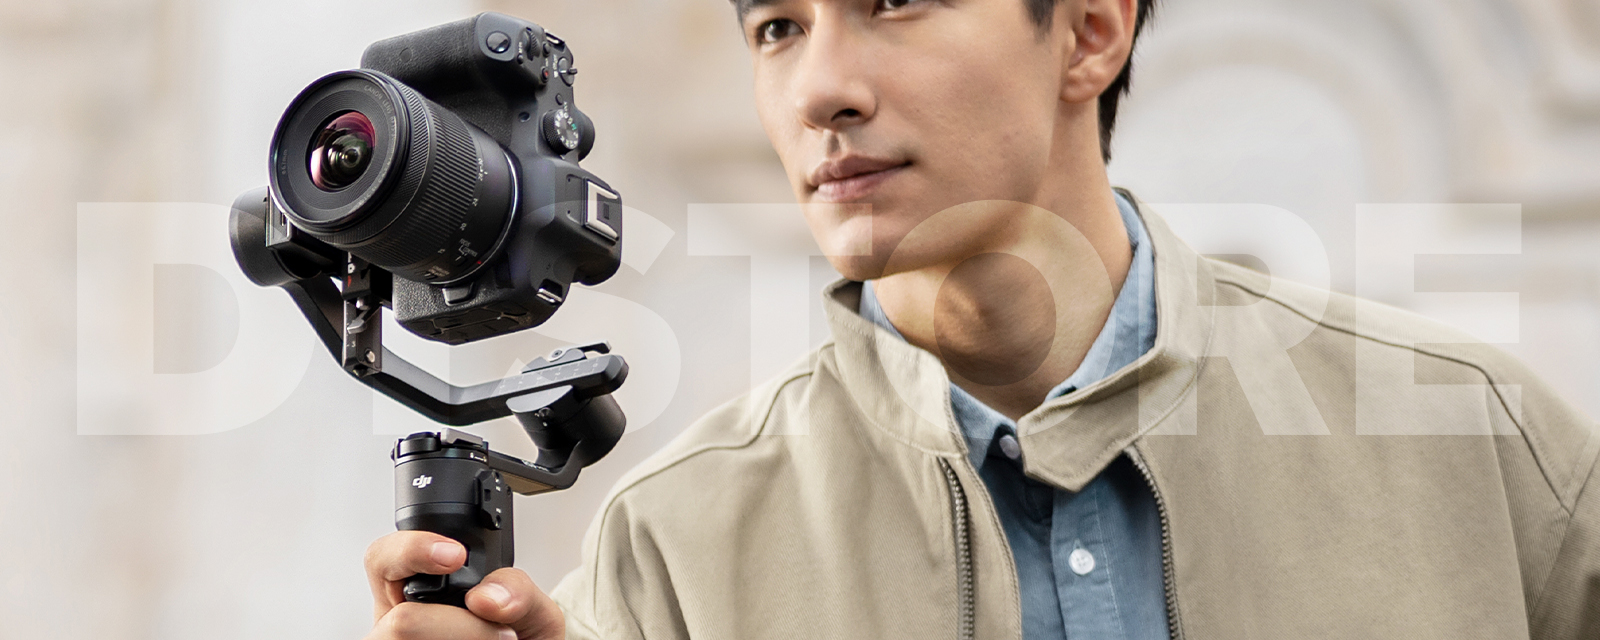 DJI RS3 Mini Camera Compatibility Guide: Full List | D1 Lounge